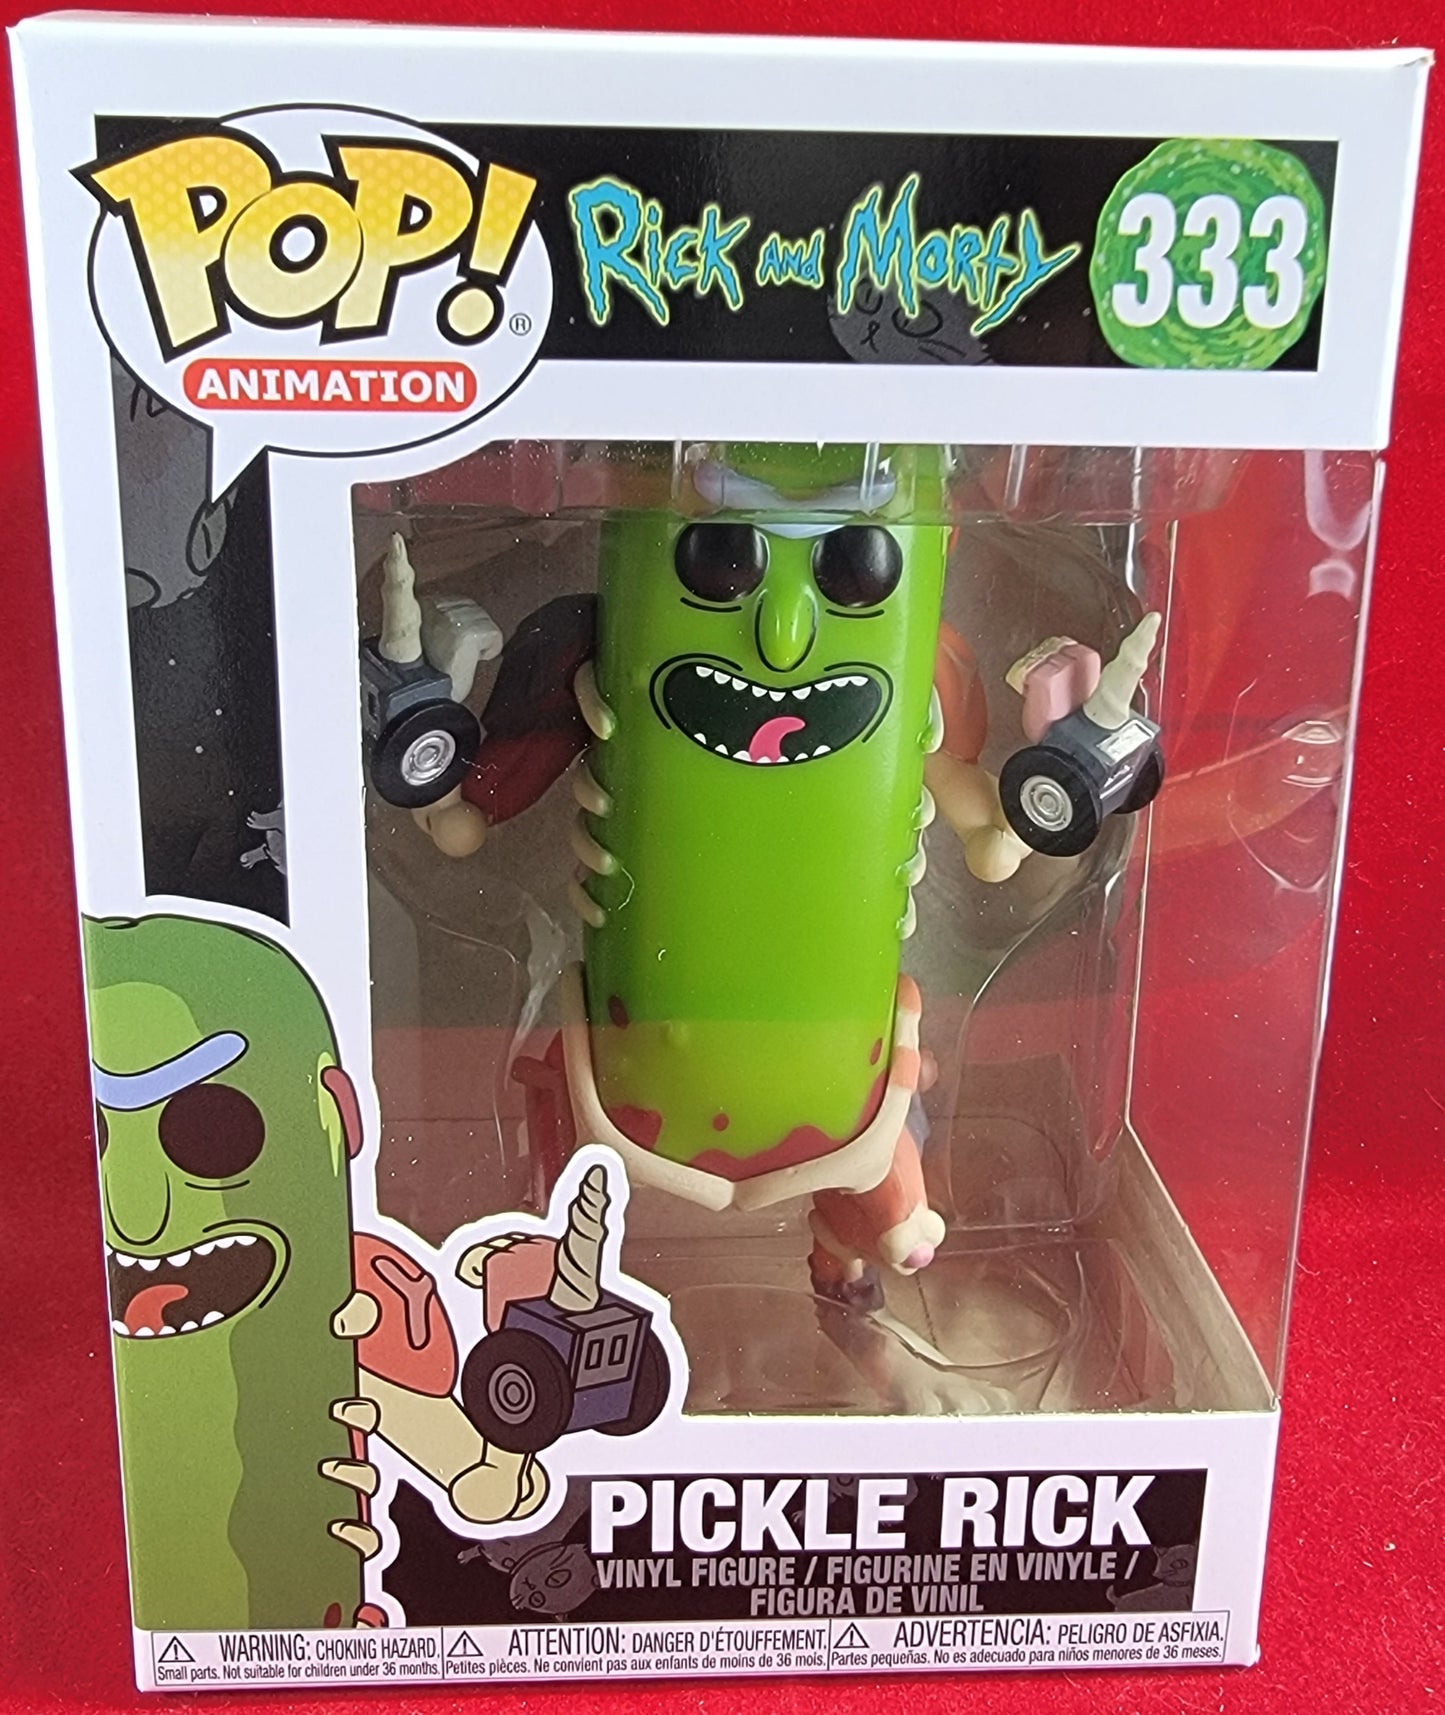 Pickle rick funko # 333 (nib)
With pop protector